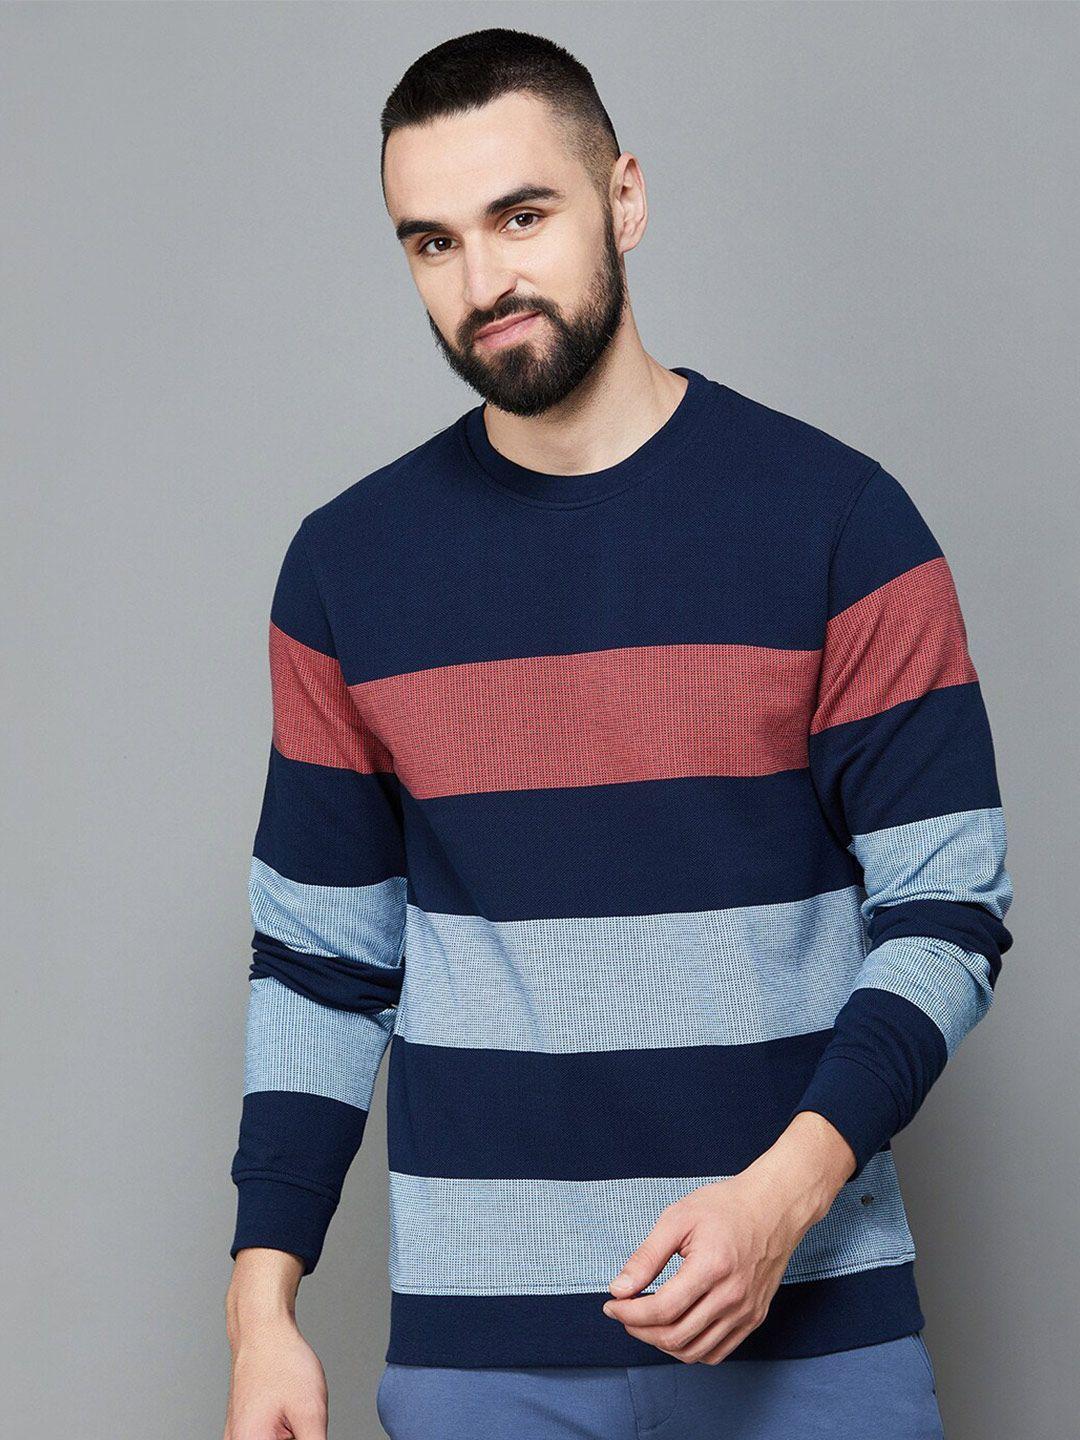 code-by-lifestyle-colourblocked-round-neck-cotton-pullover-sweatshirt